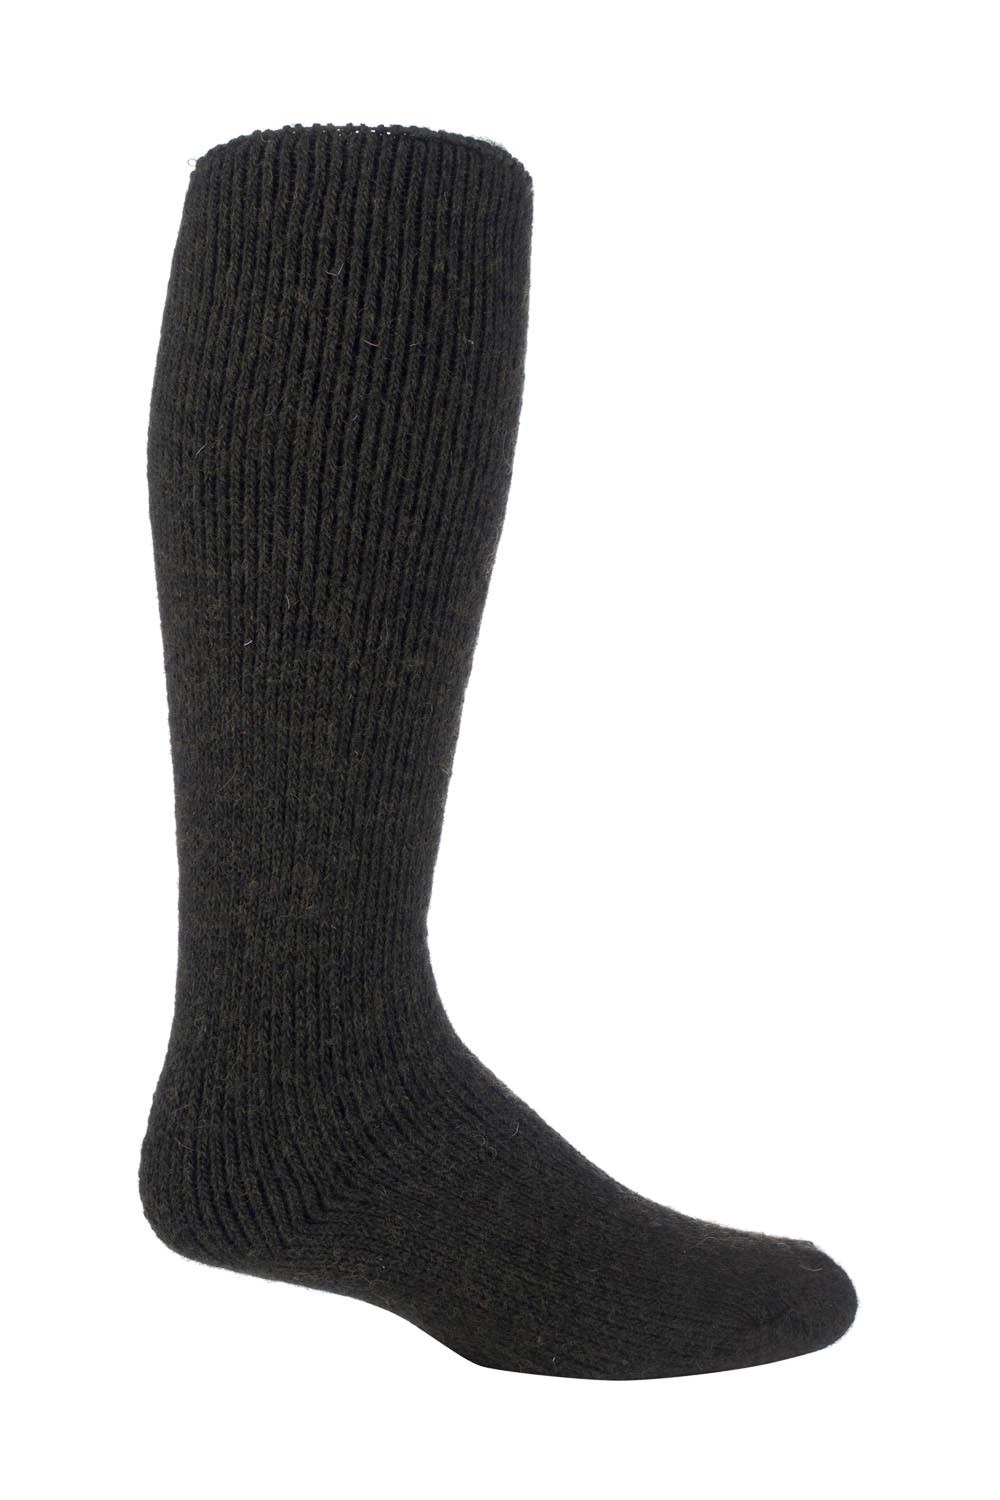 Mens Extra Long Thermal Wool Socks